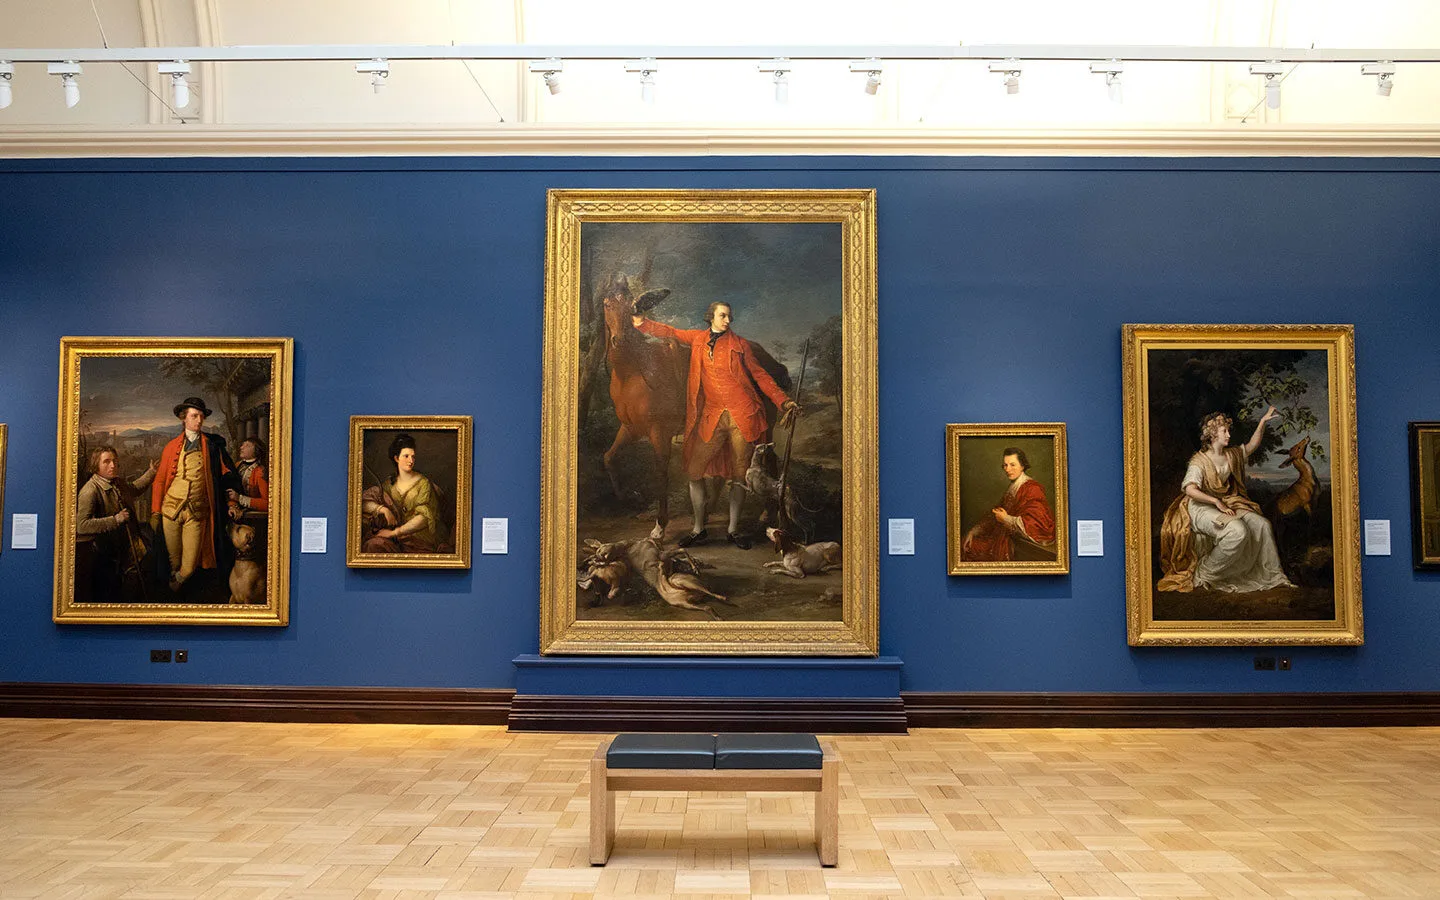 Exhibits in The Scottish National Portrait Gallery in Edinburgh